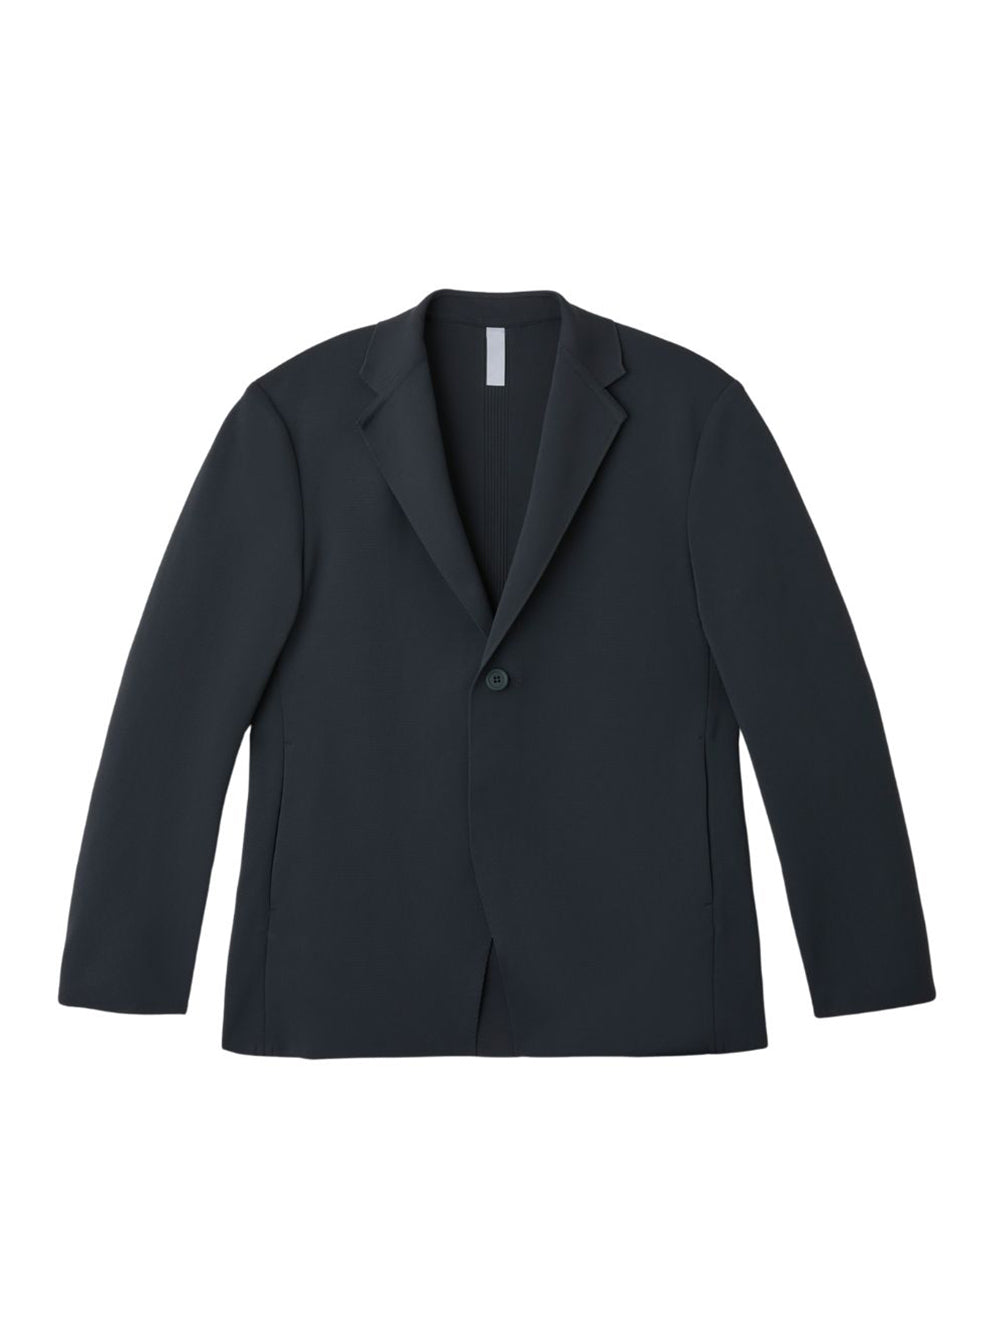 Milan Rib Tailored Jacket (Shadow Gray)